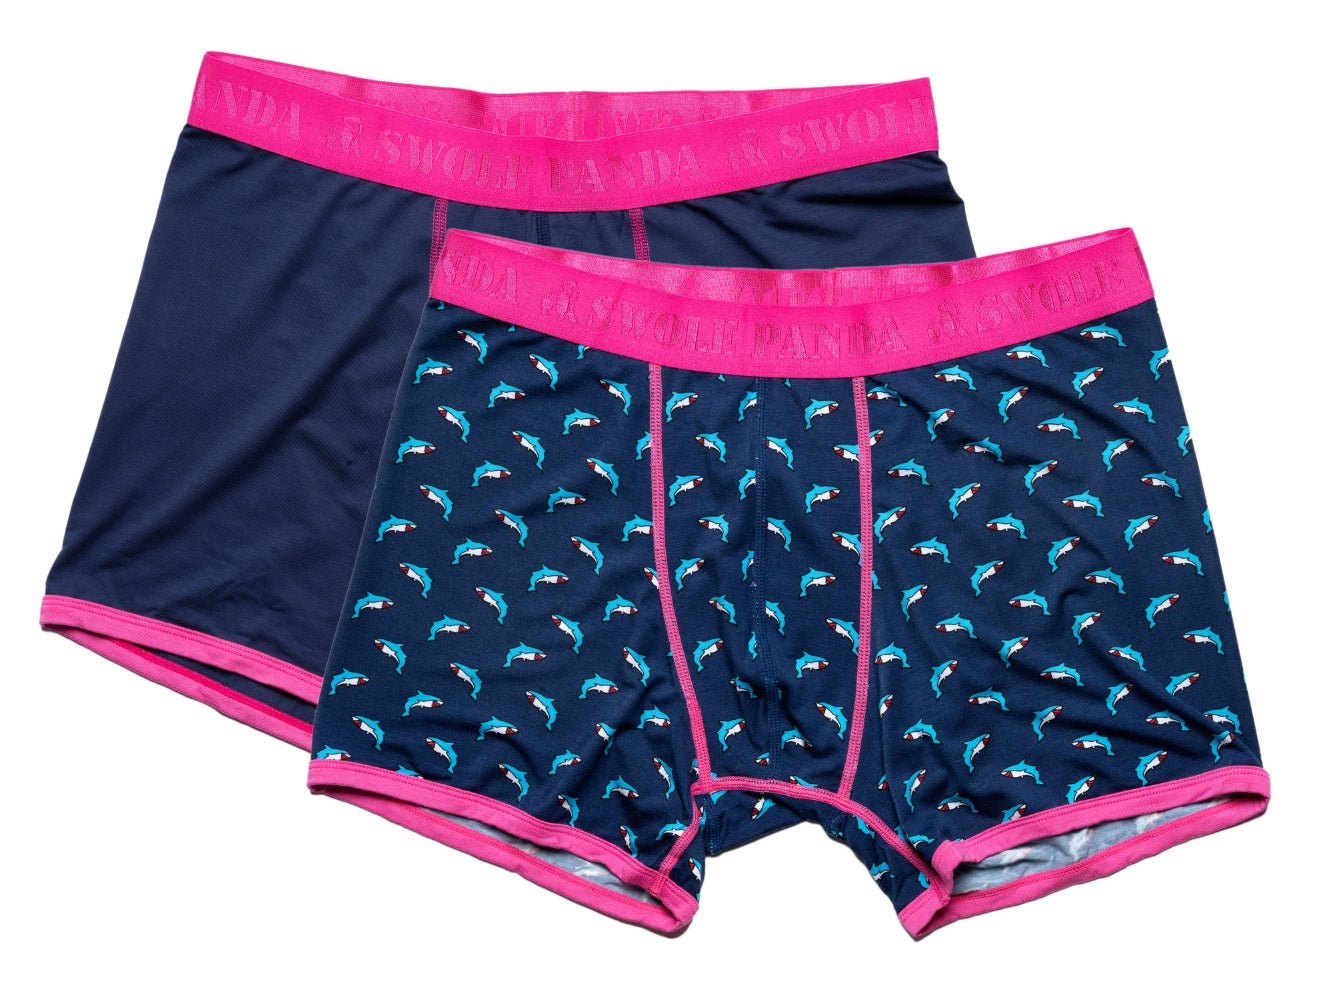 underwear-bamboo-boxers-2-pack-pink-navy-sharks-1.jpg